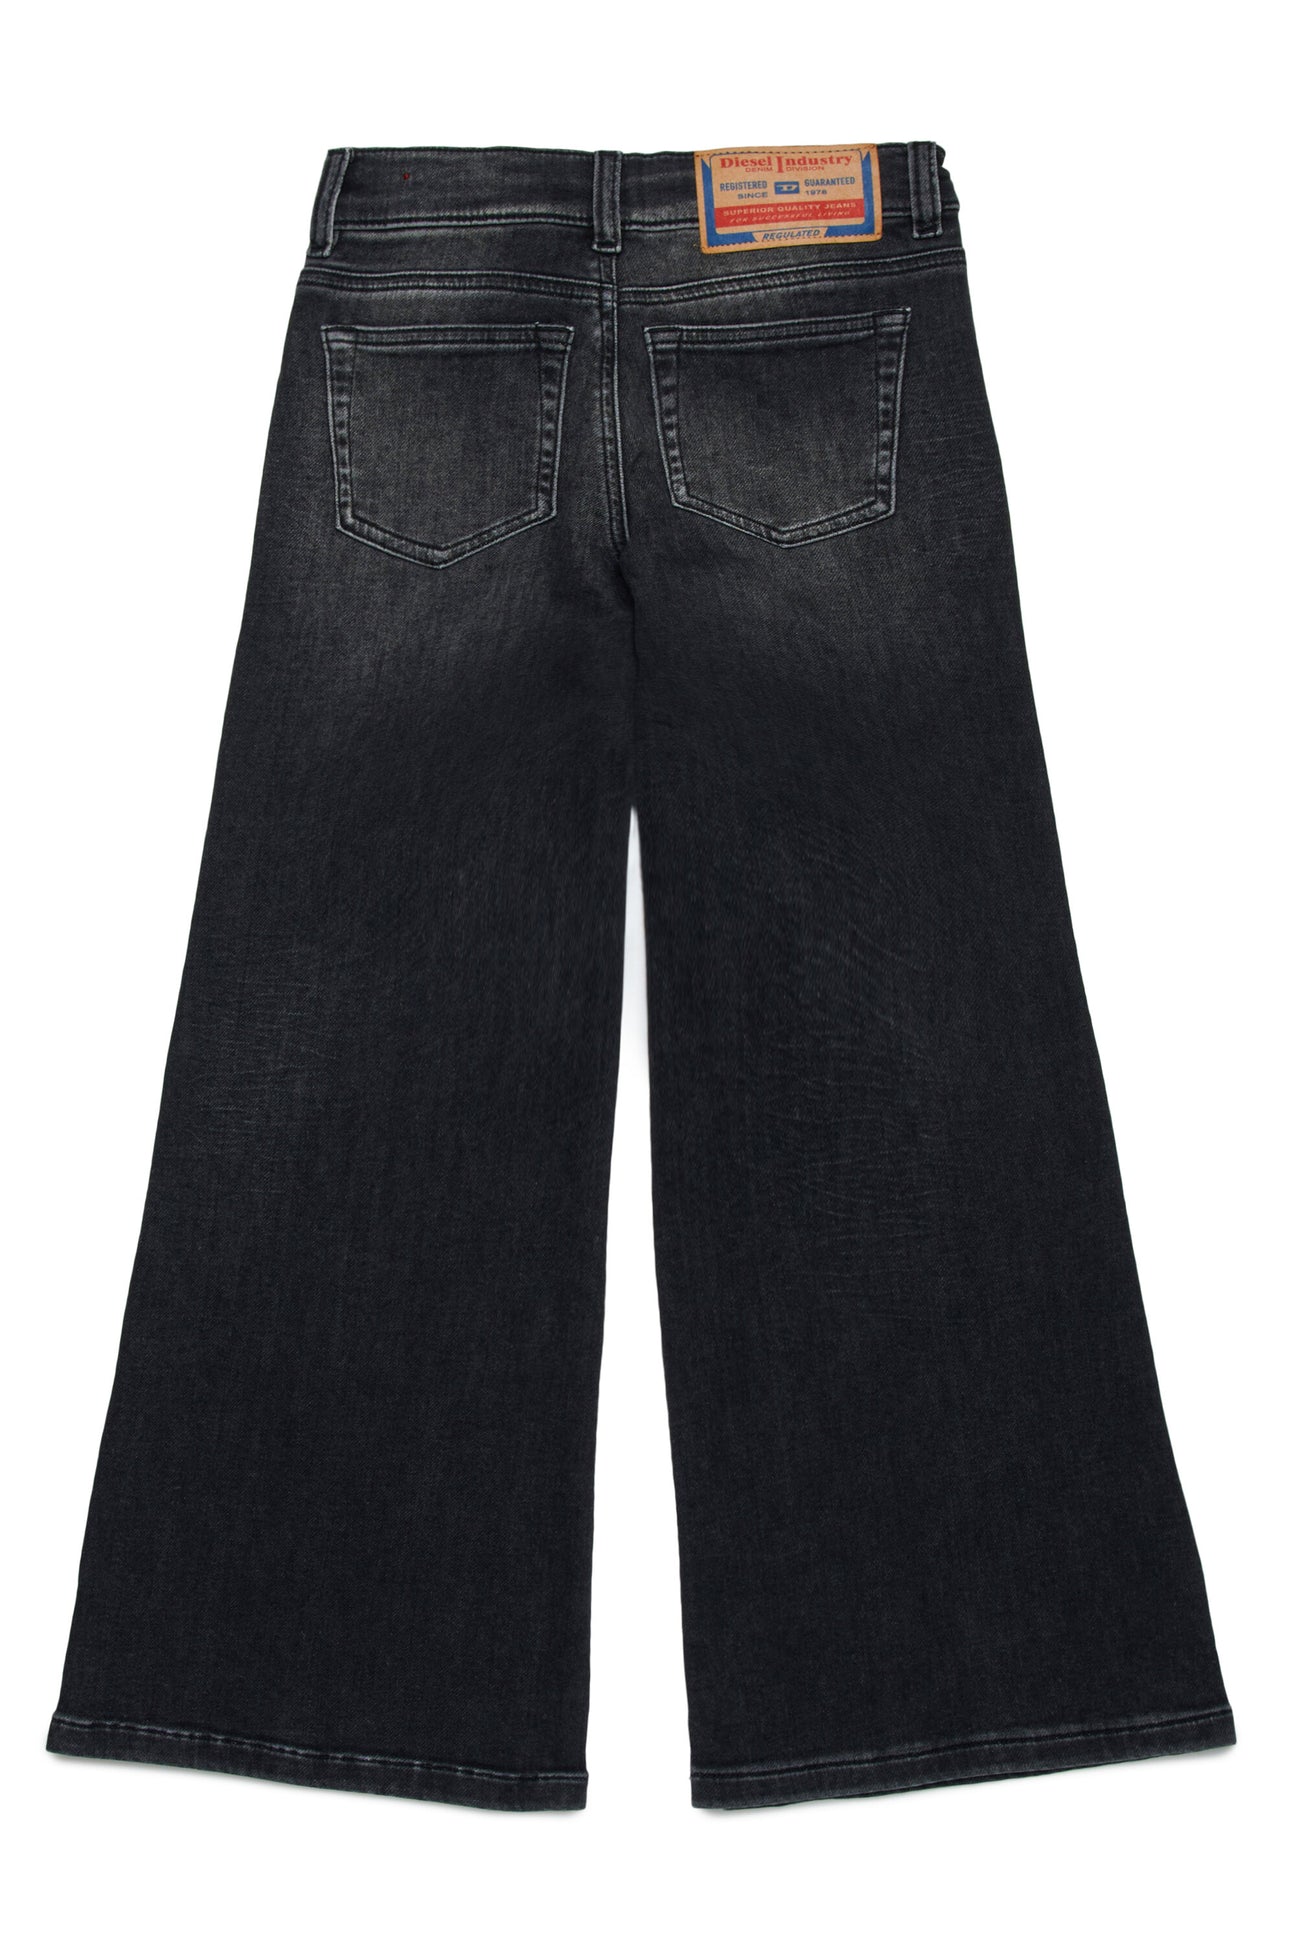 Black gradient flare JoggJeans® - 1978 Black gradient flare JoggJeans® - 1978